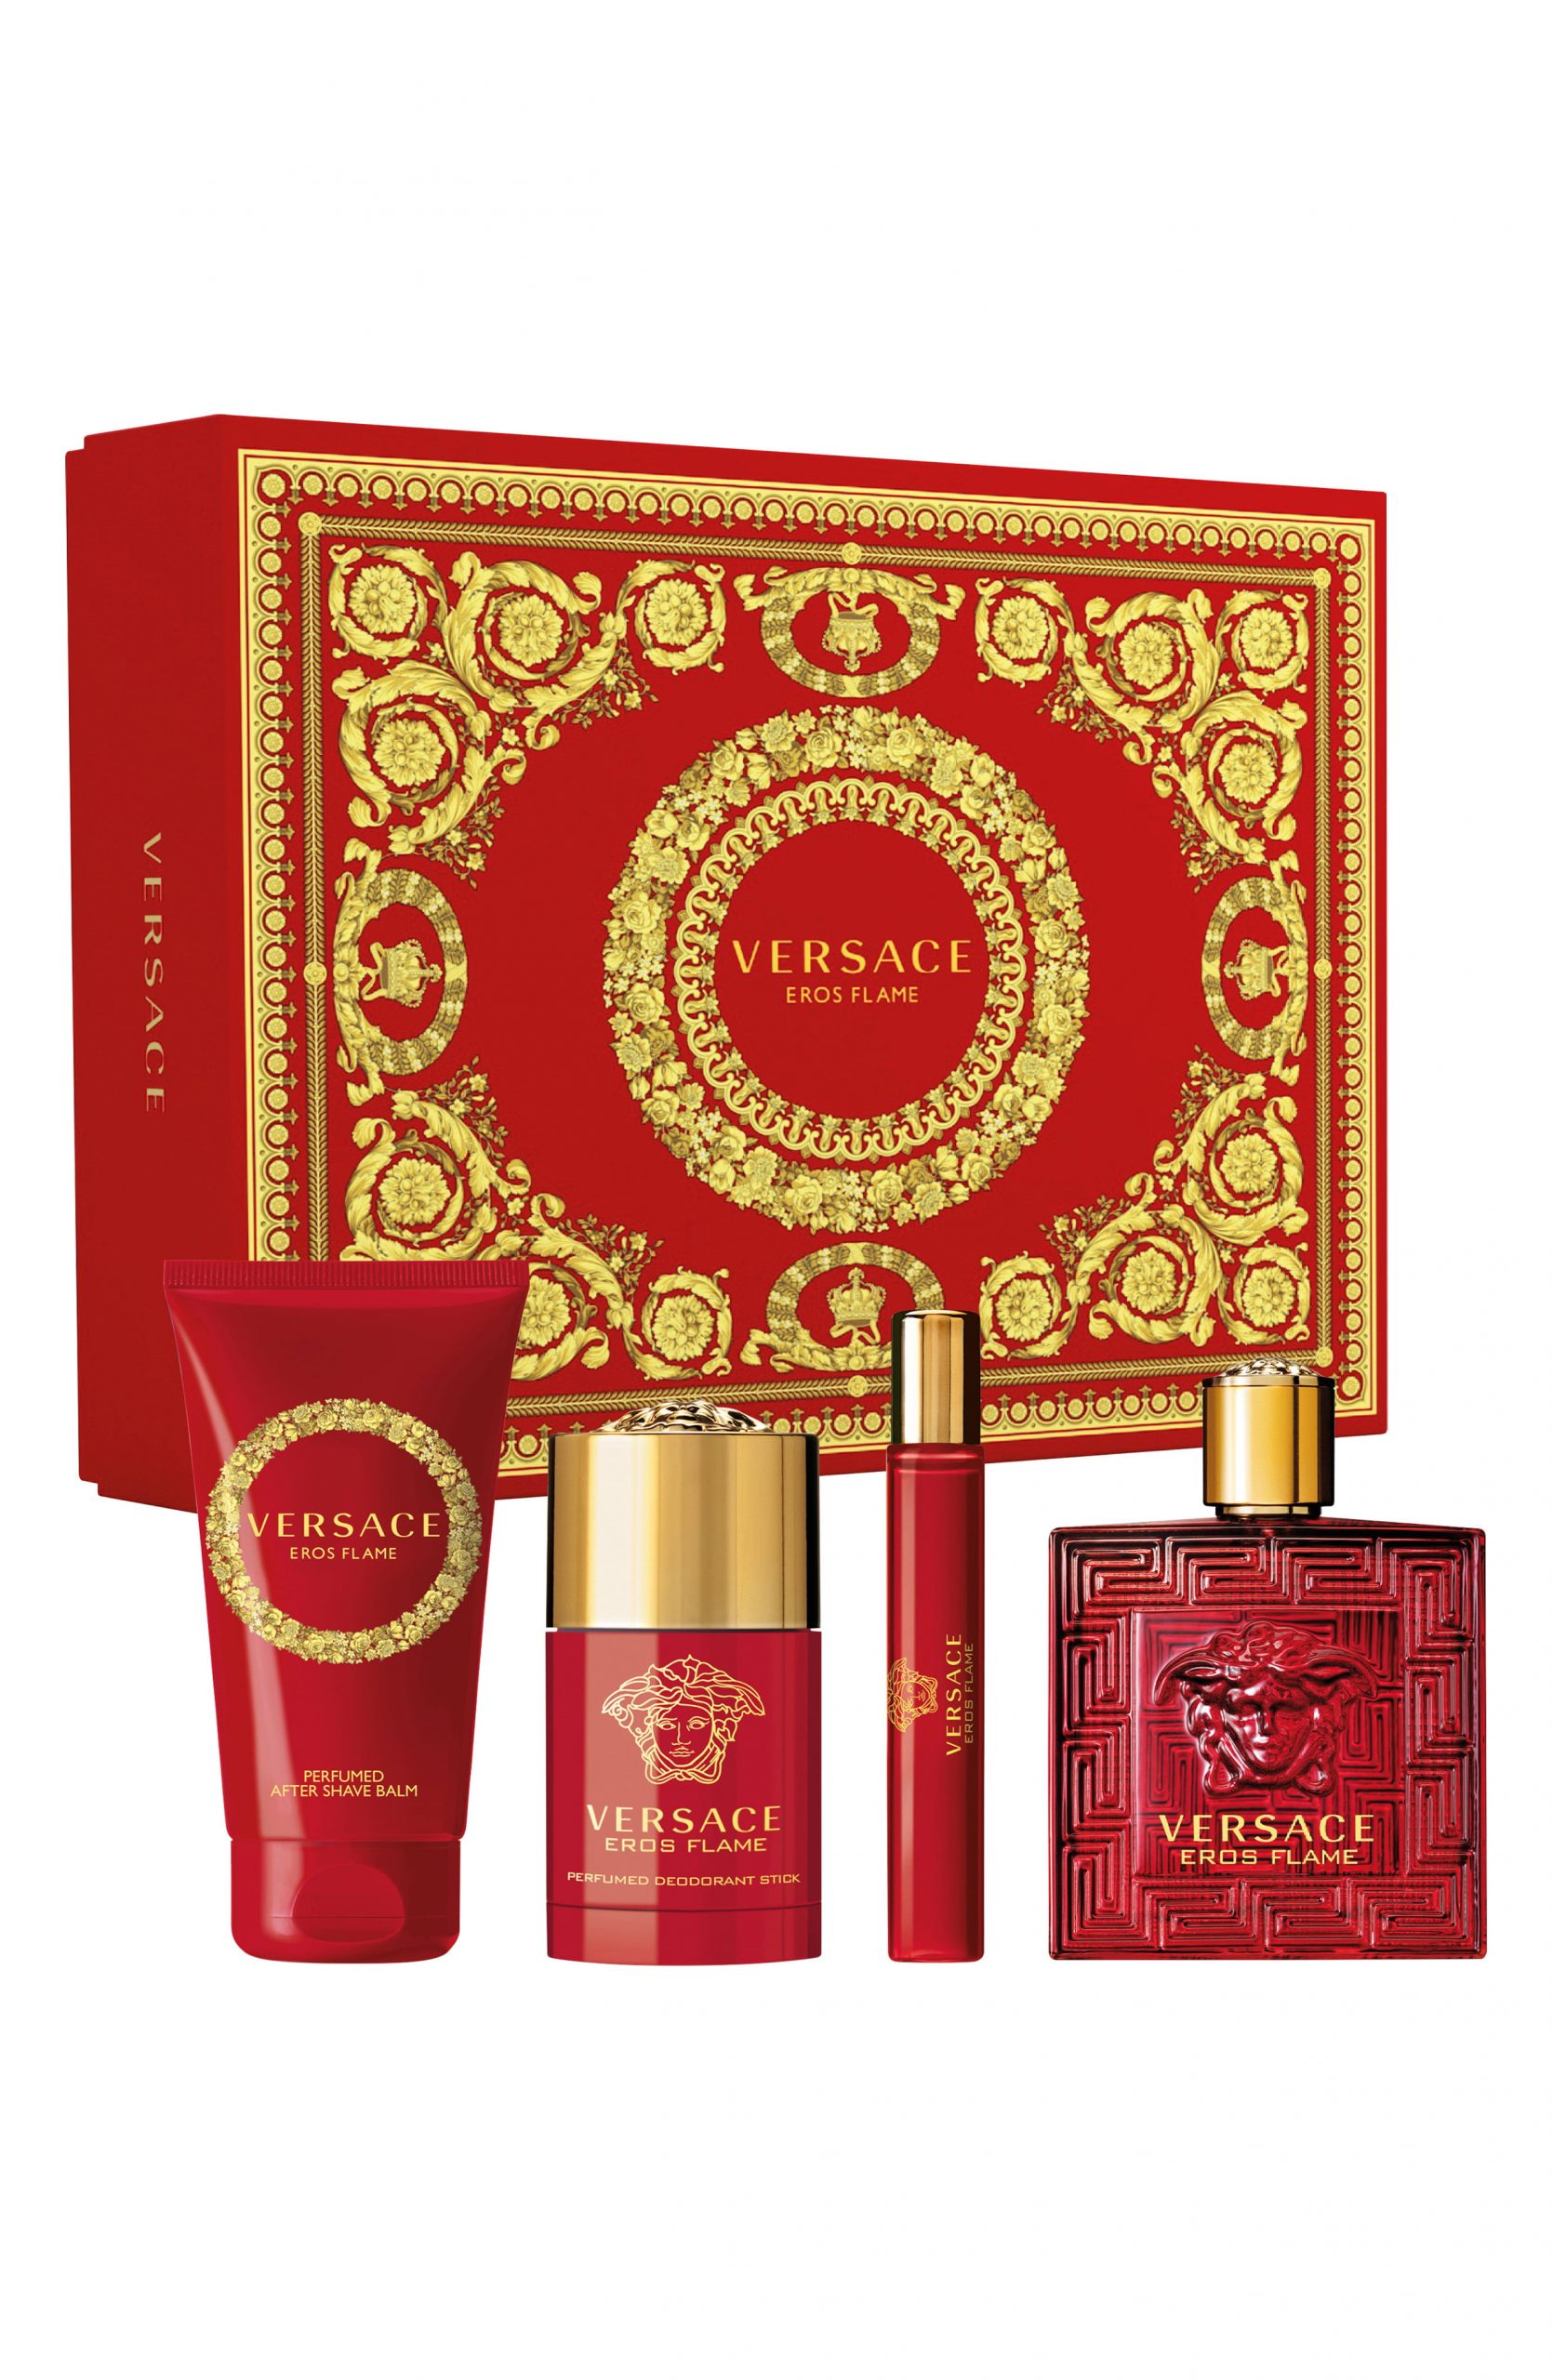 Версаче флейм. Versace Eros Flame. Versace Eros Flame Parfum. Versace Flame. Versace Eros Flame красные красивое фото.